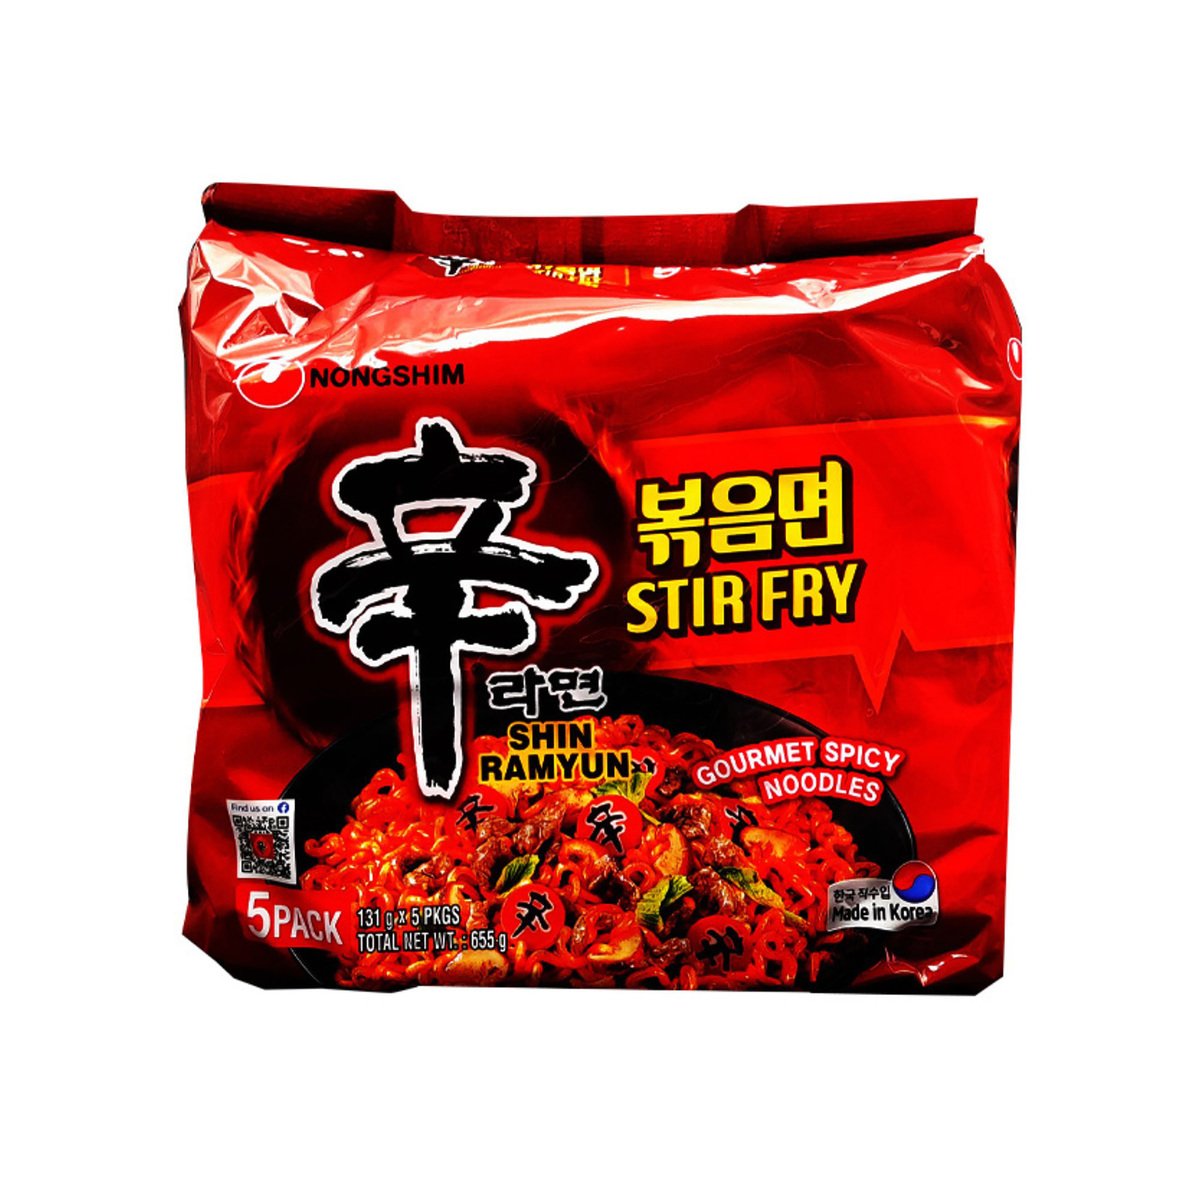 Nongshim Shin Ramyun Stir Fry Gourmet Spicy Noodles 5 x 131 g